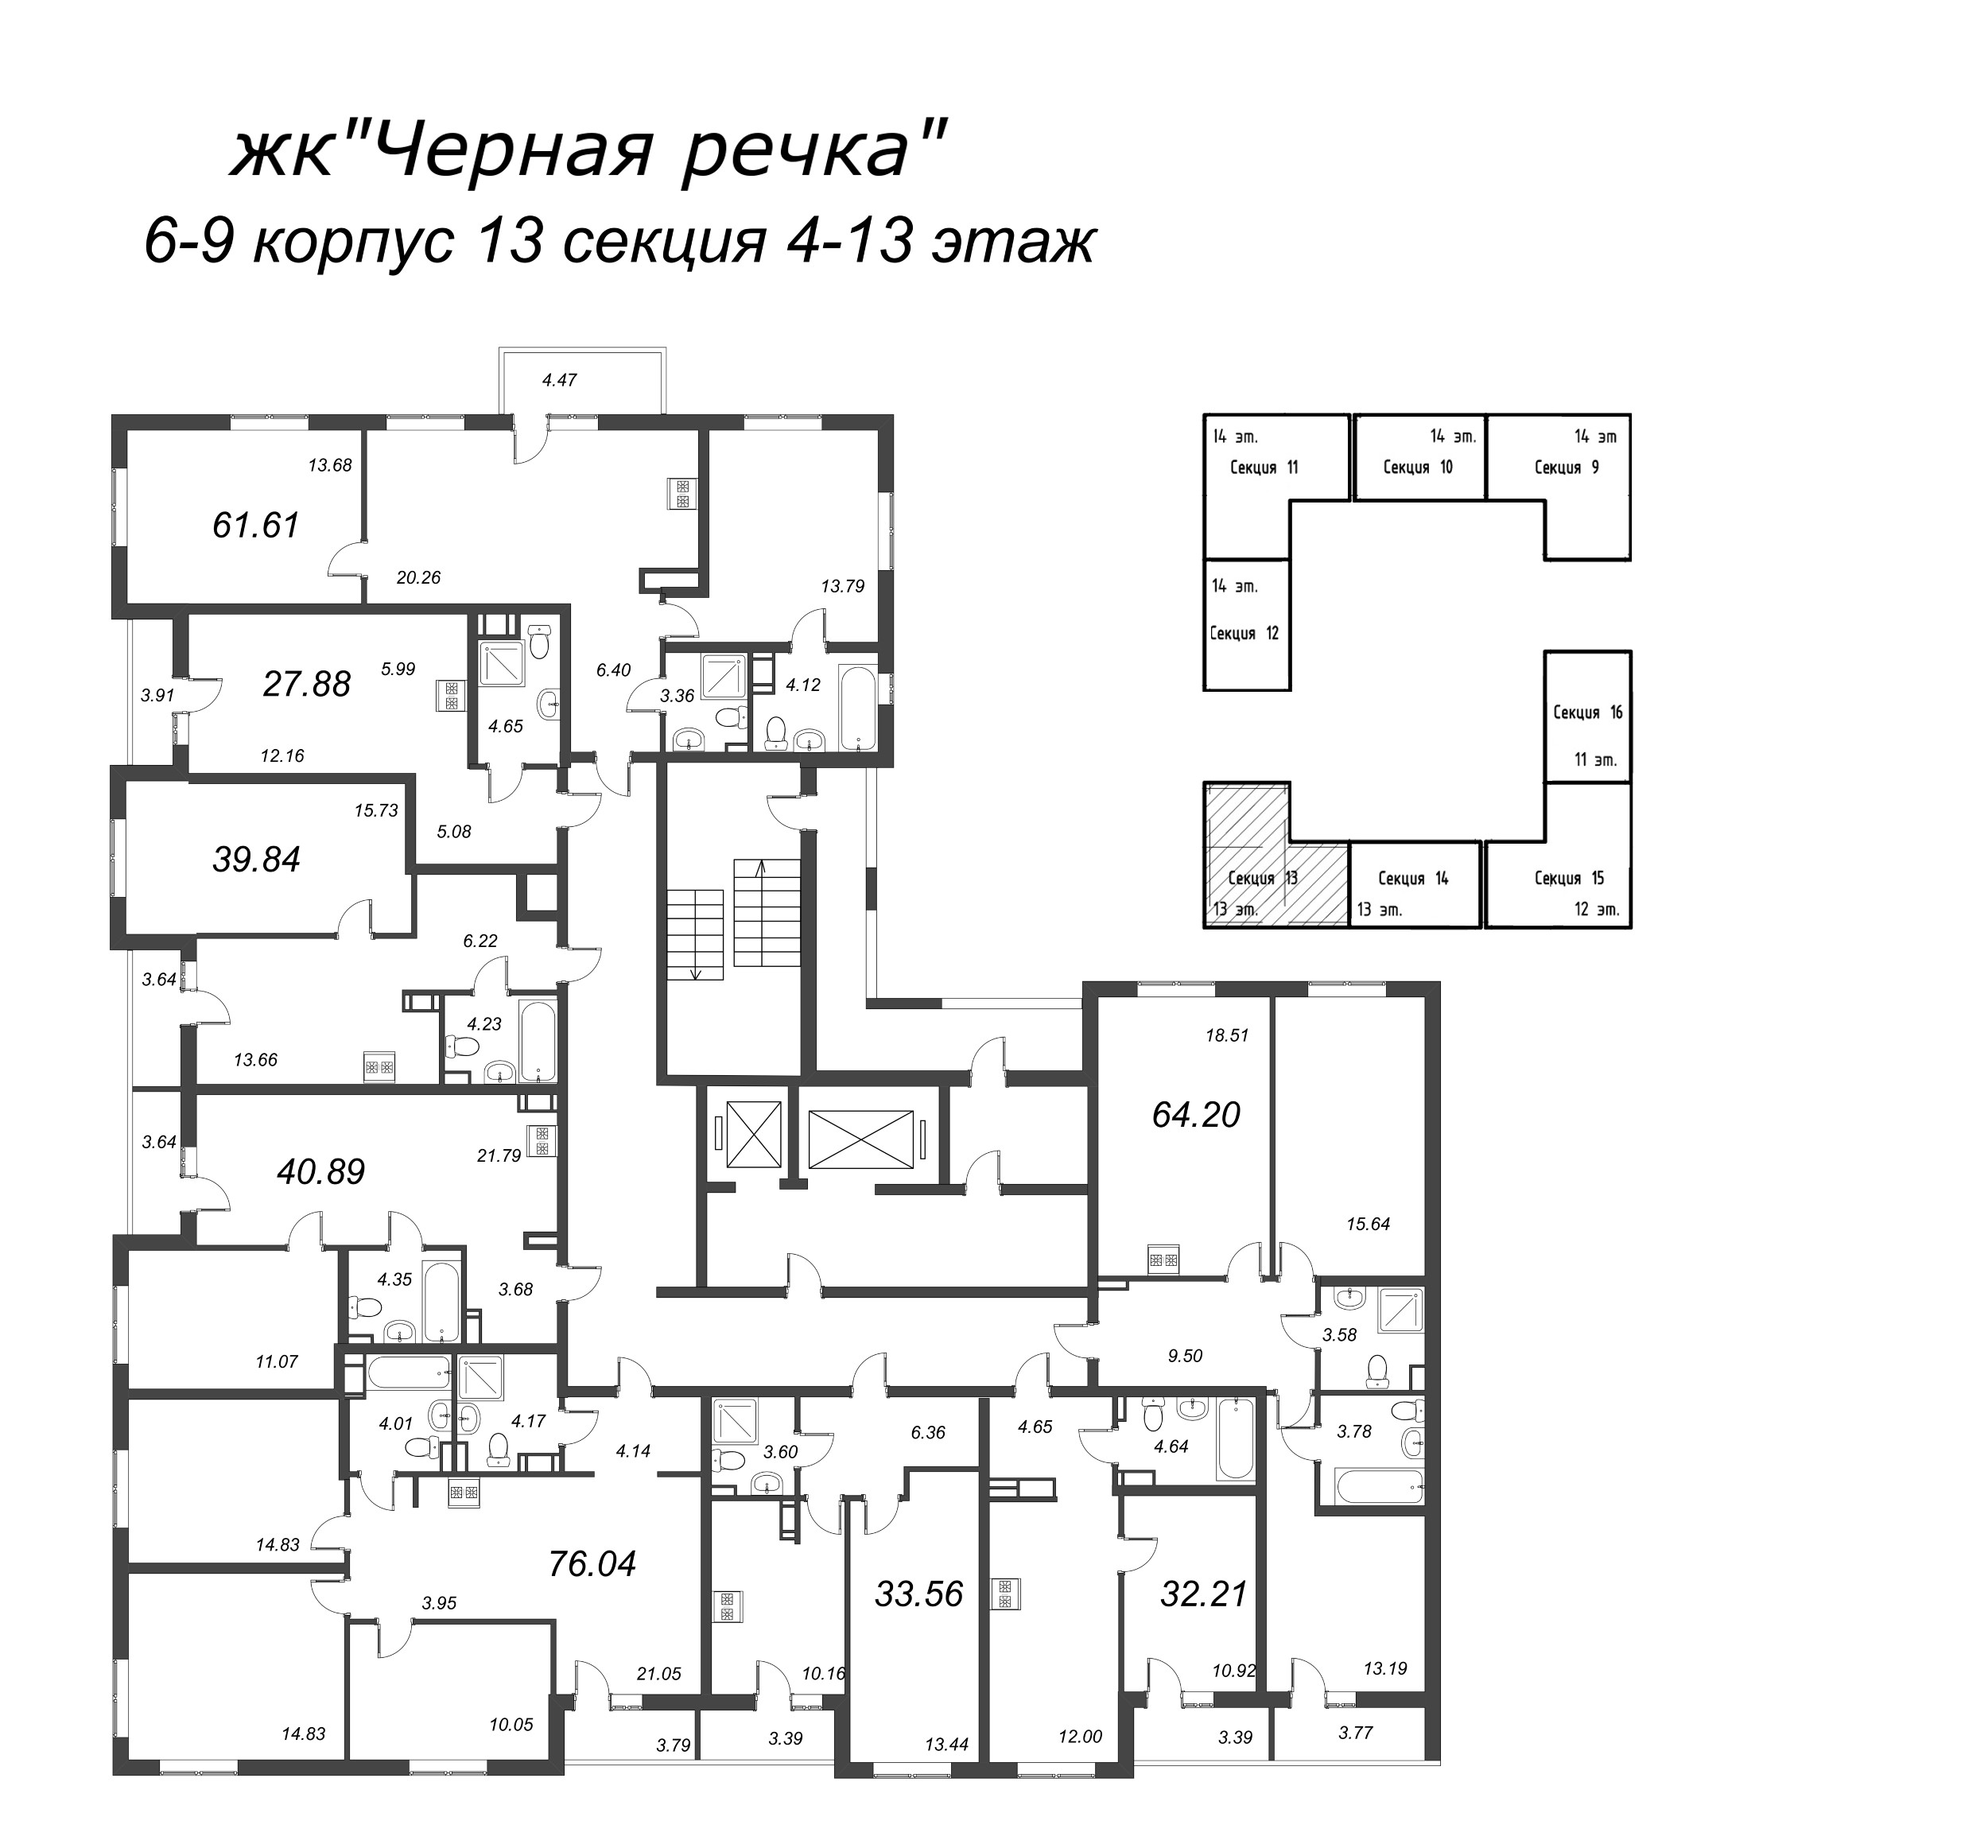 4-комнатная (Евро) квартира, 76.04 м² - планировка этажа